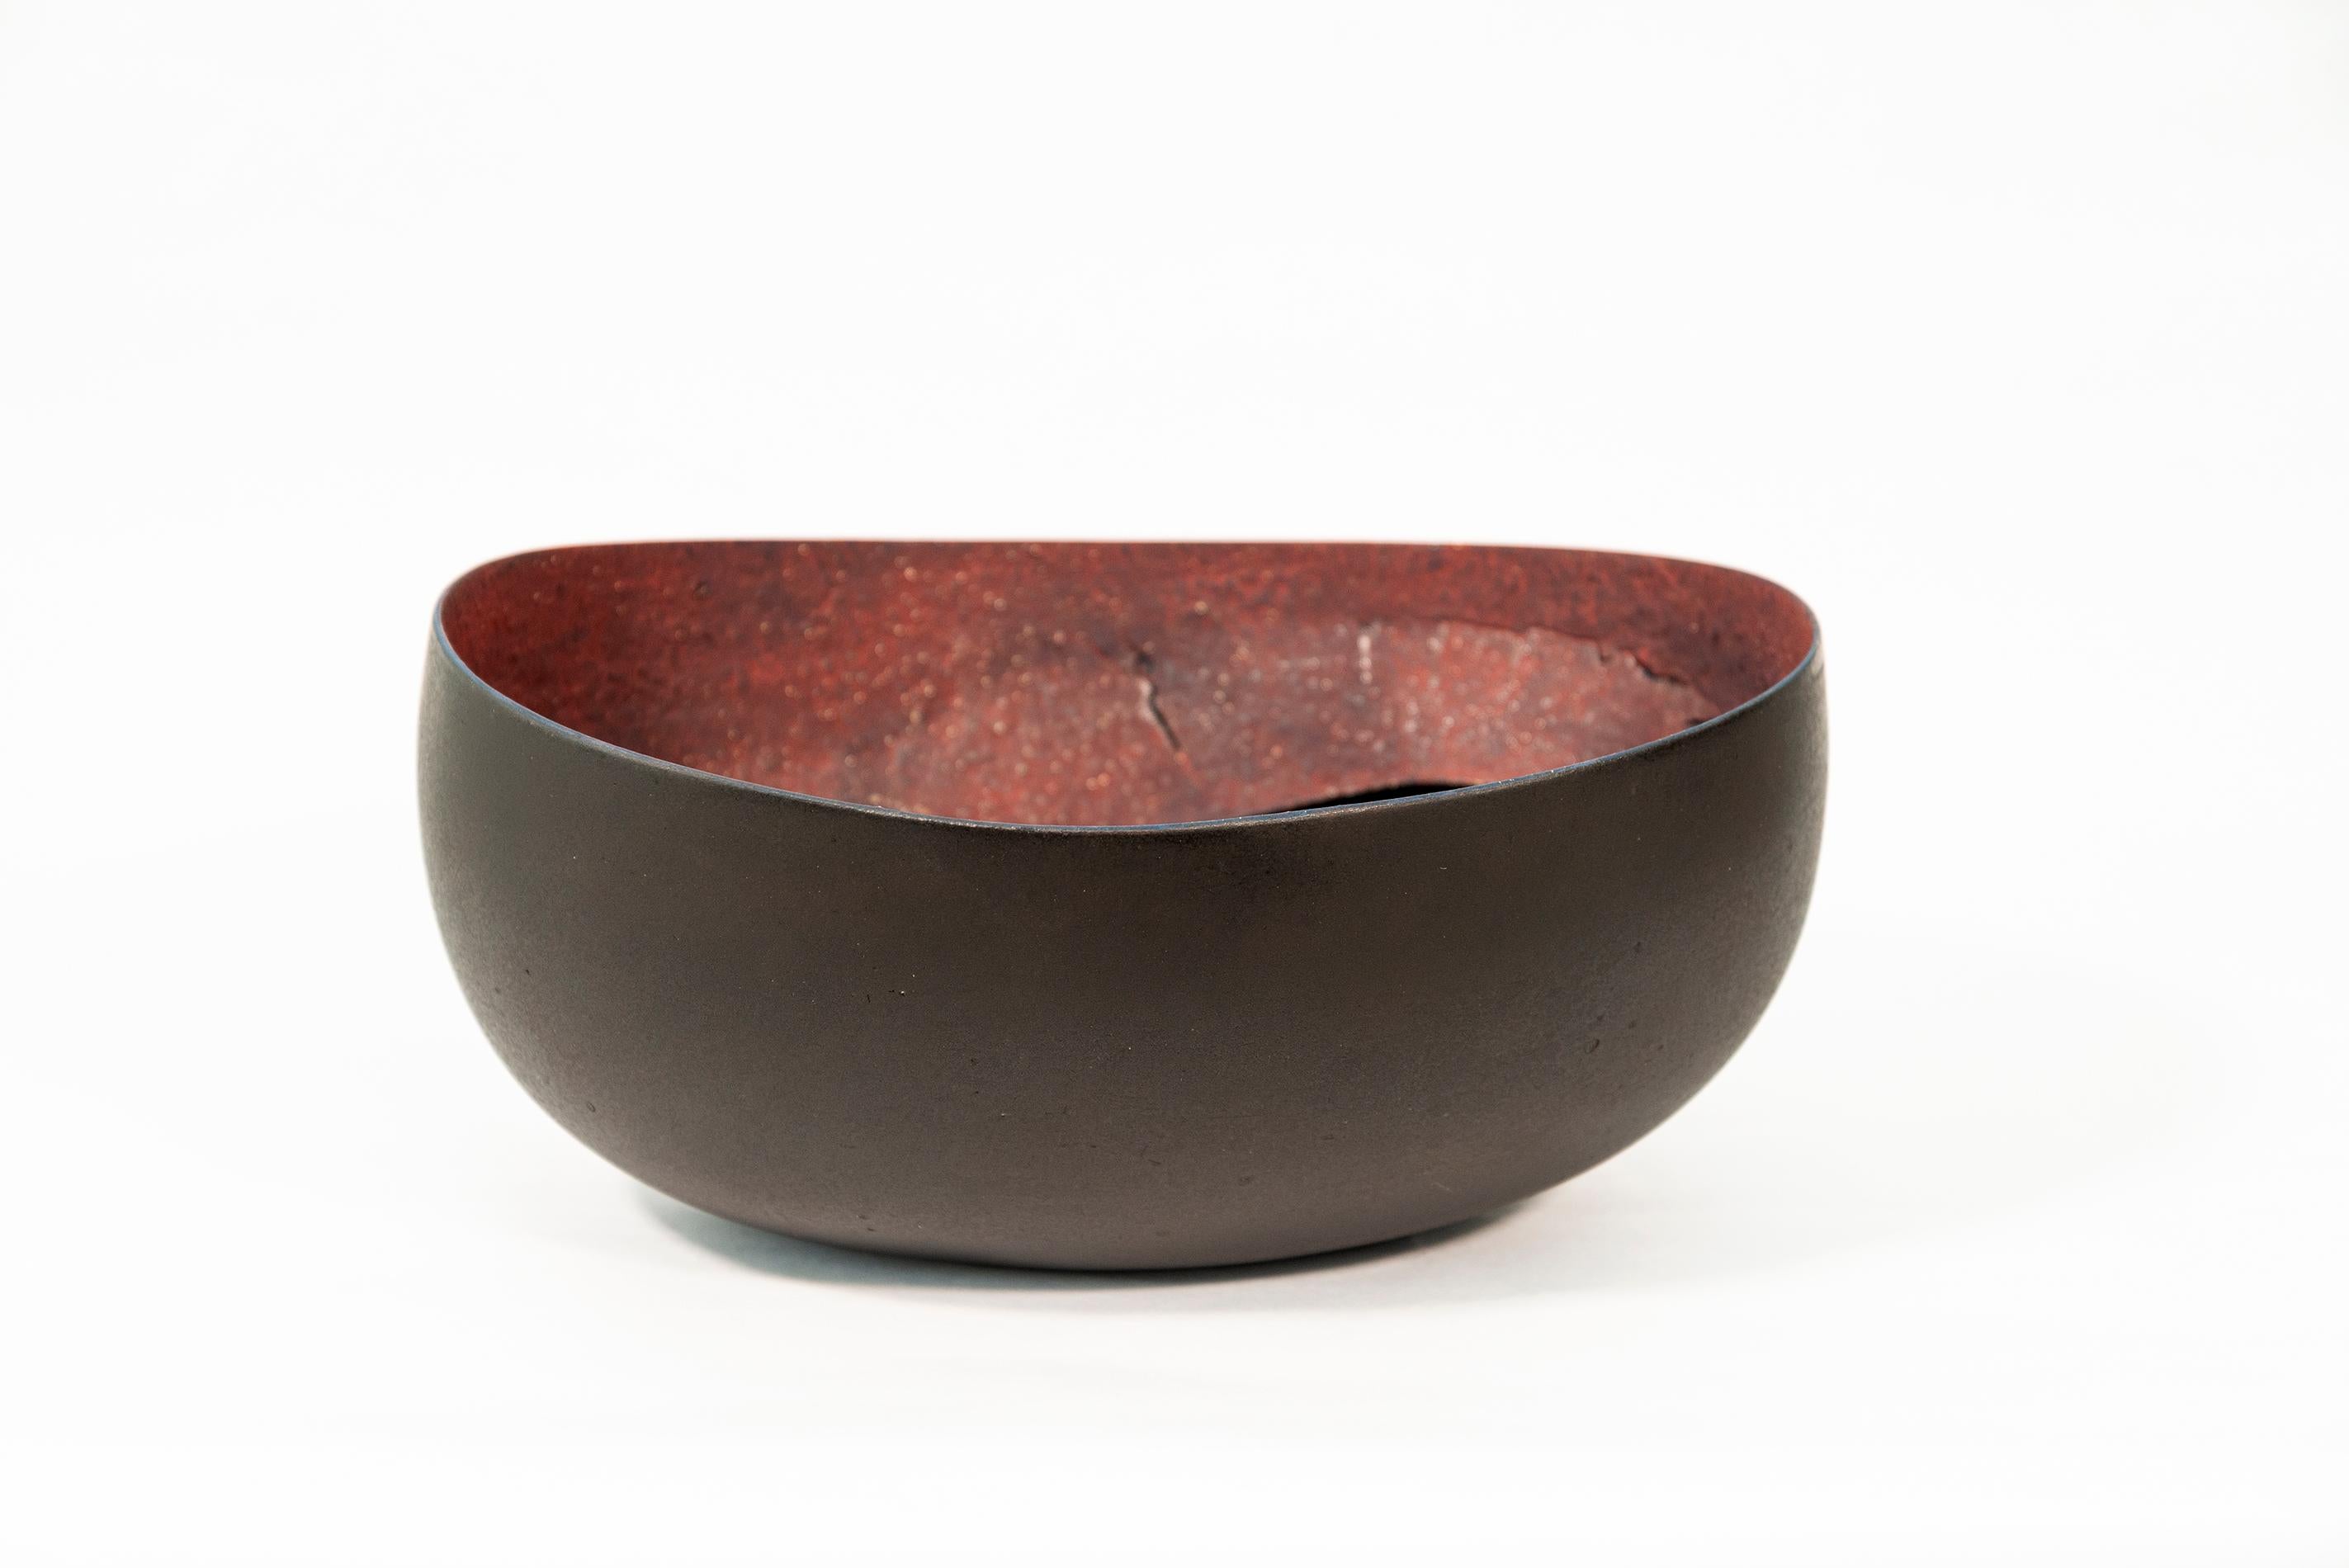 Untitled Bowl (Black) - black, red, nature inspired, textured, ceramic vessel - Sculpture by Steven Heinemann